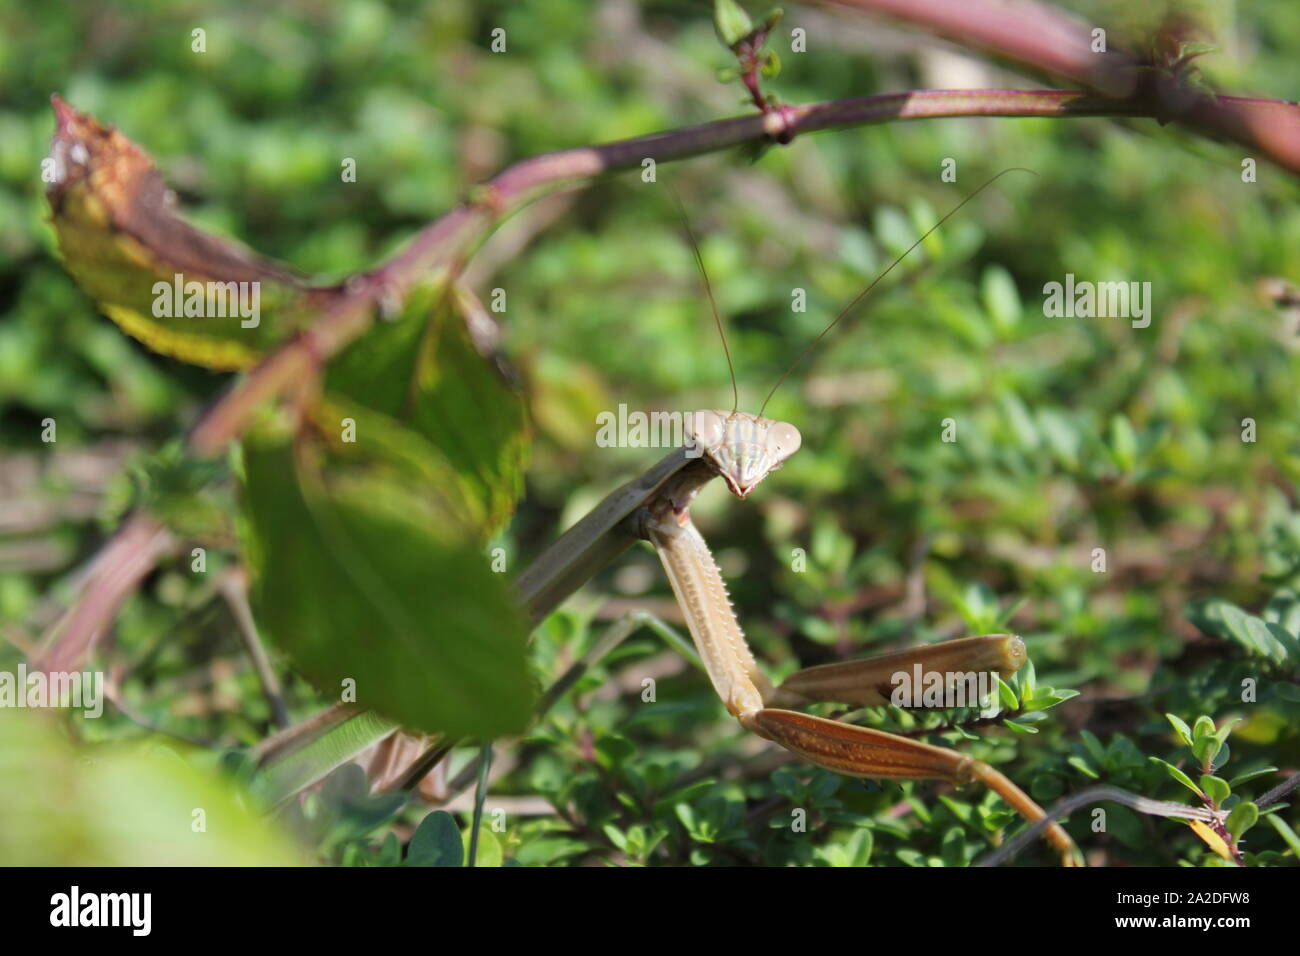 Adult Praying mantid, mantis, insect walking around its autumn garden. Stock Photo